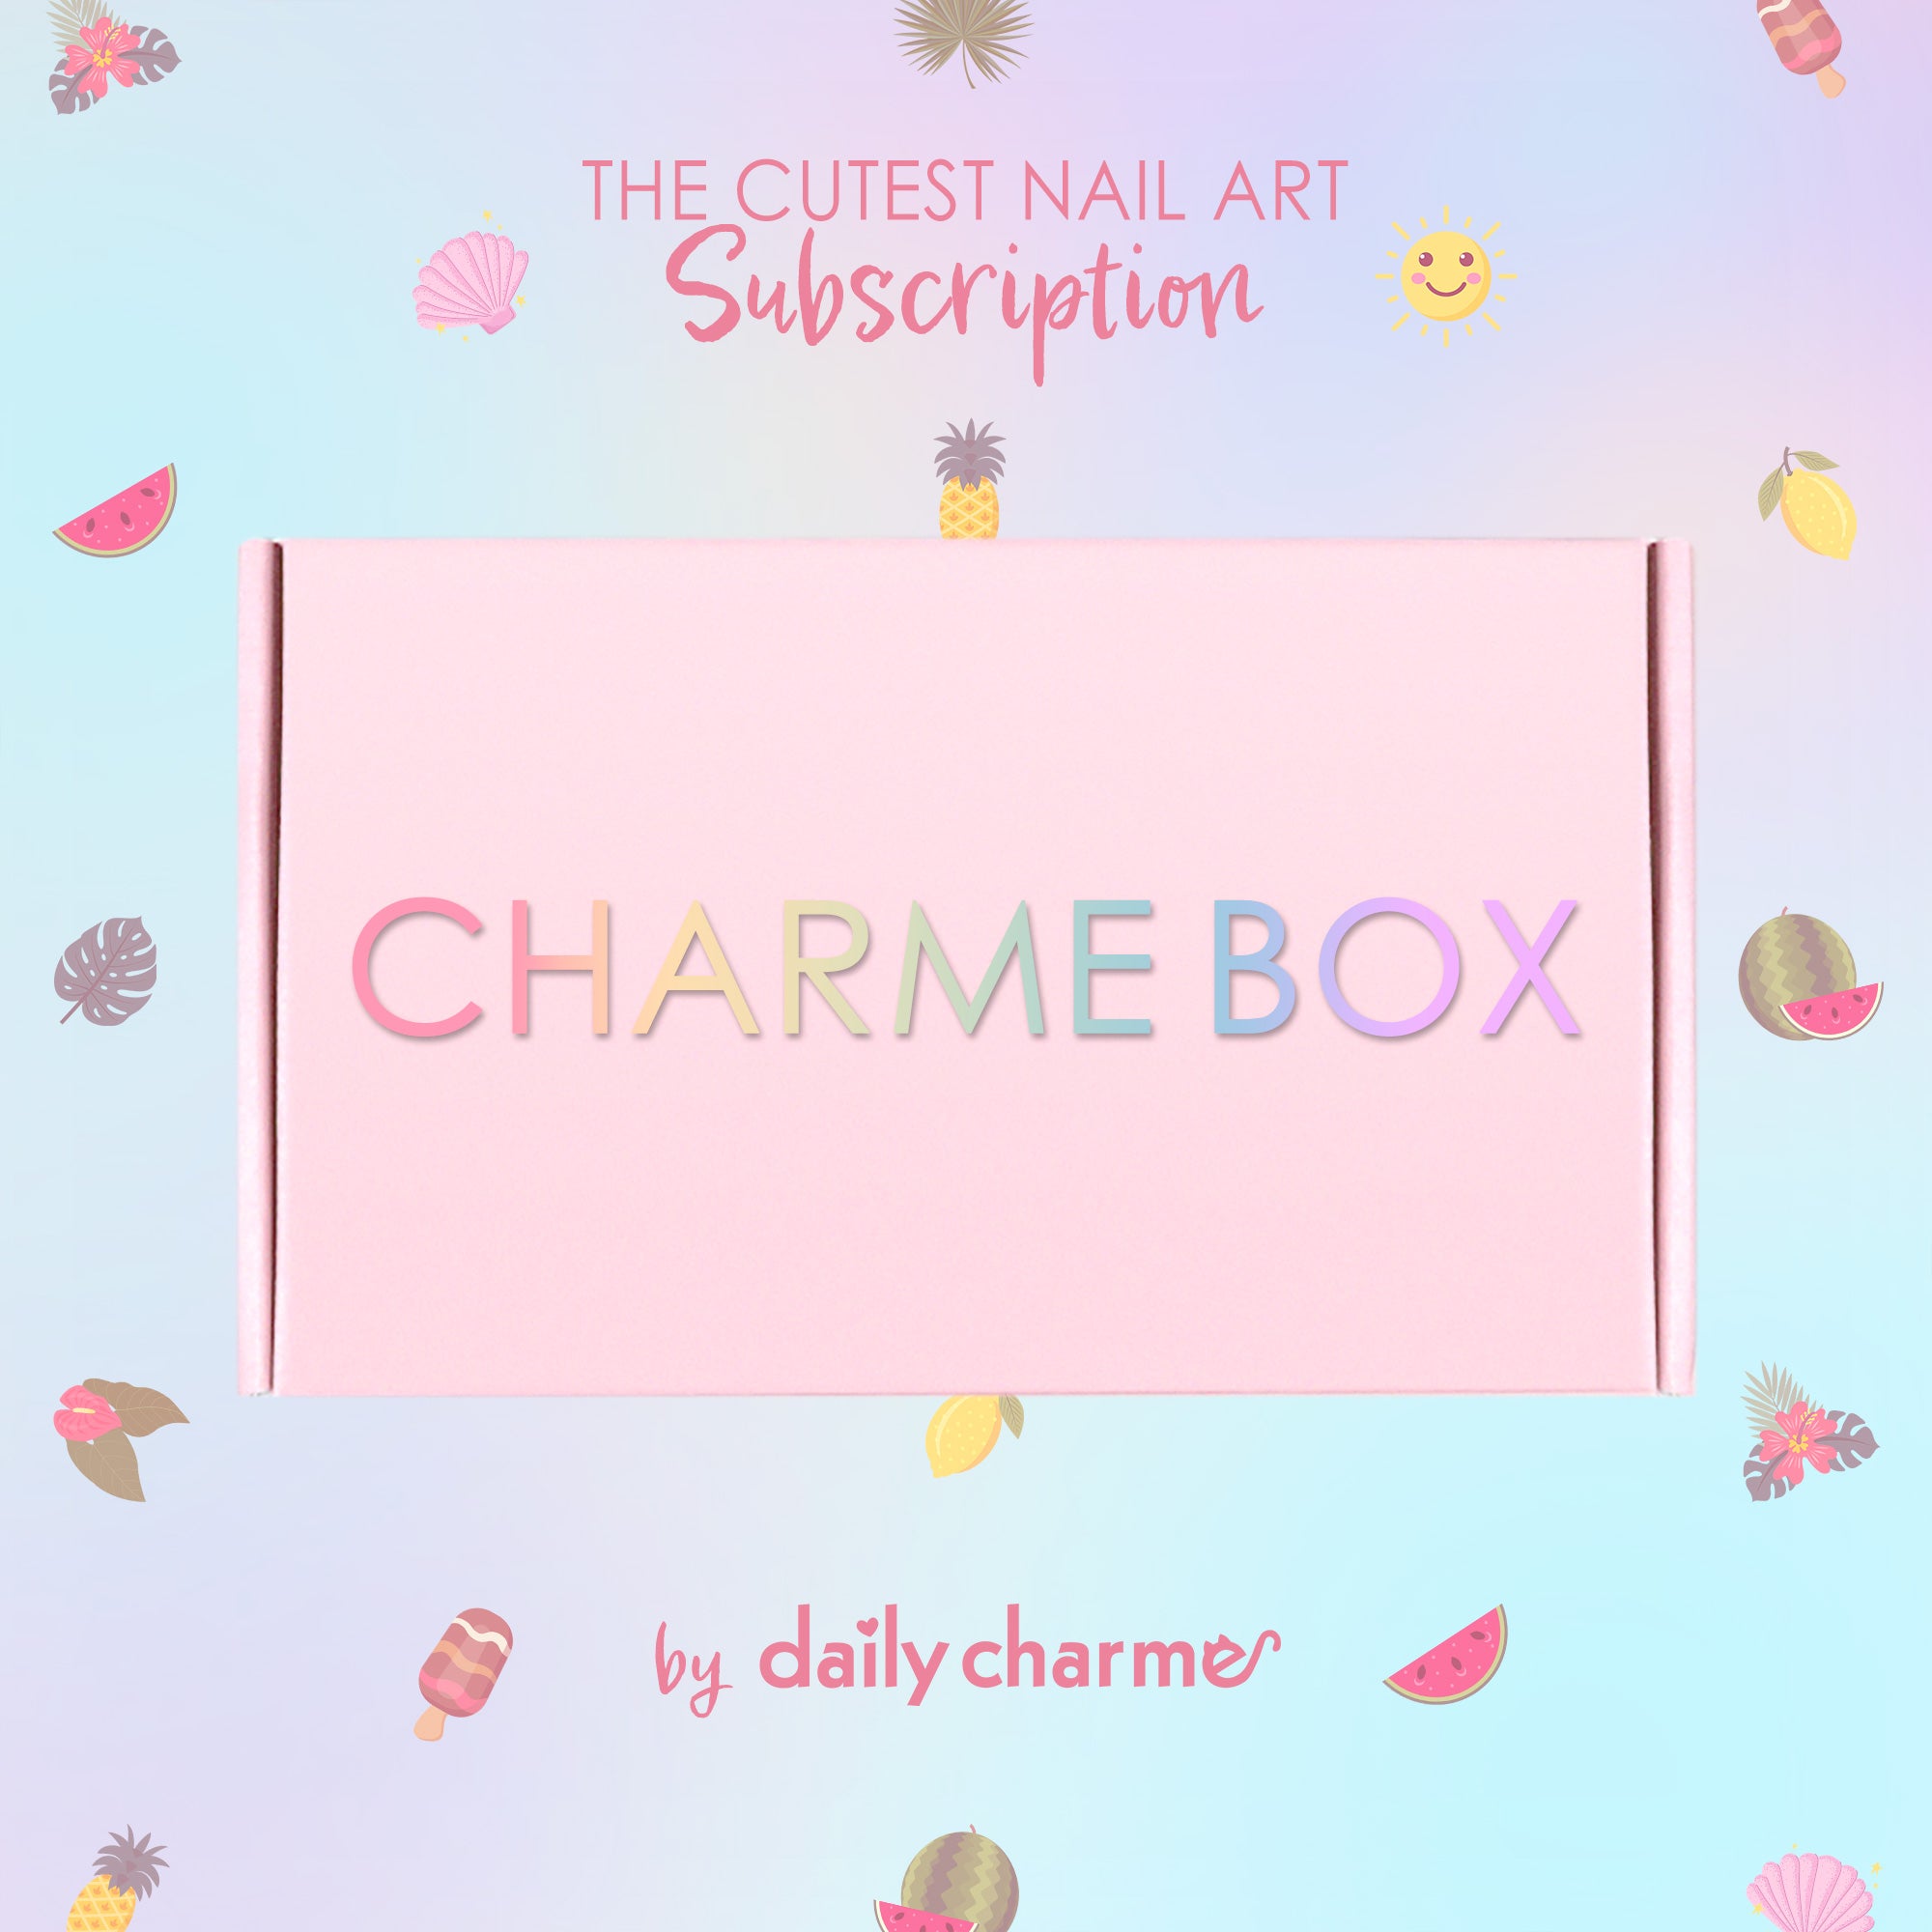 Charme Box | Daily Charme Nail Art Mystery Box Subscription Gift Idea Best Cutest